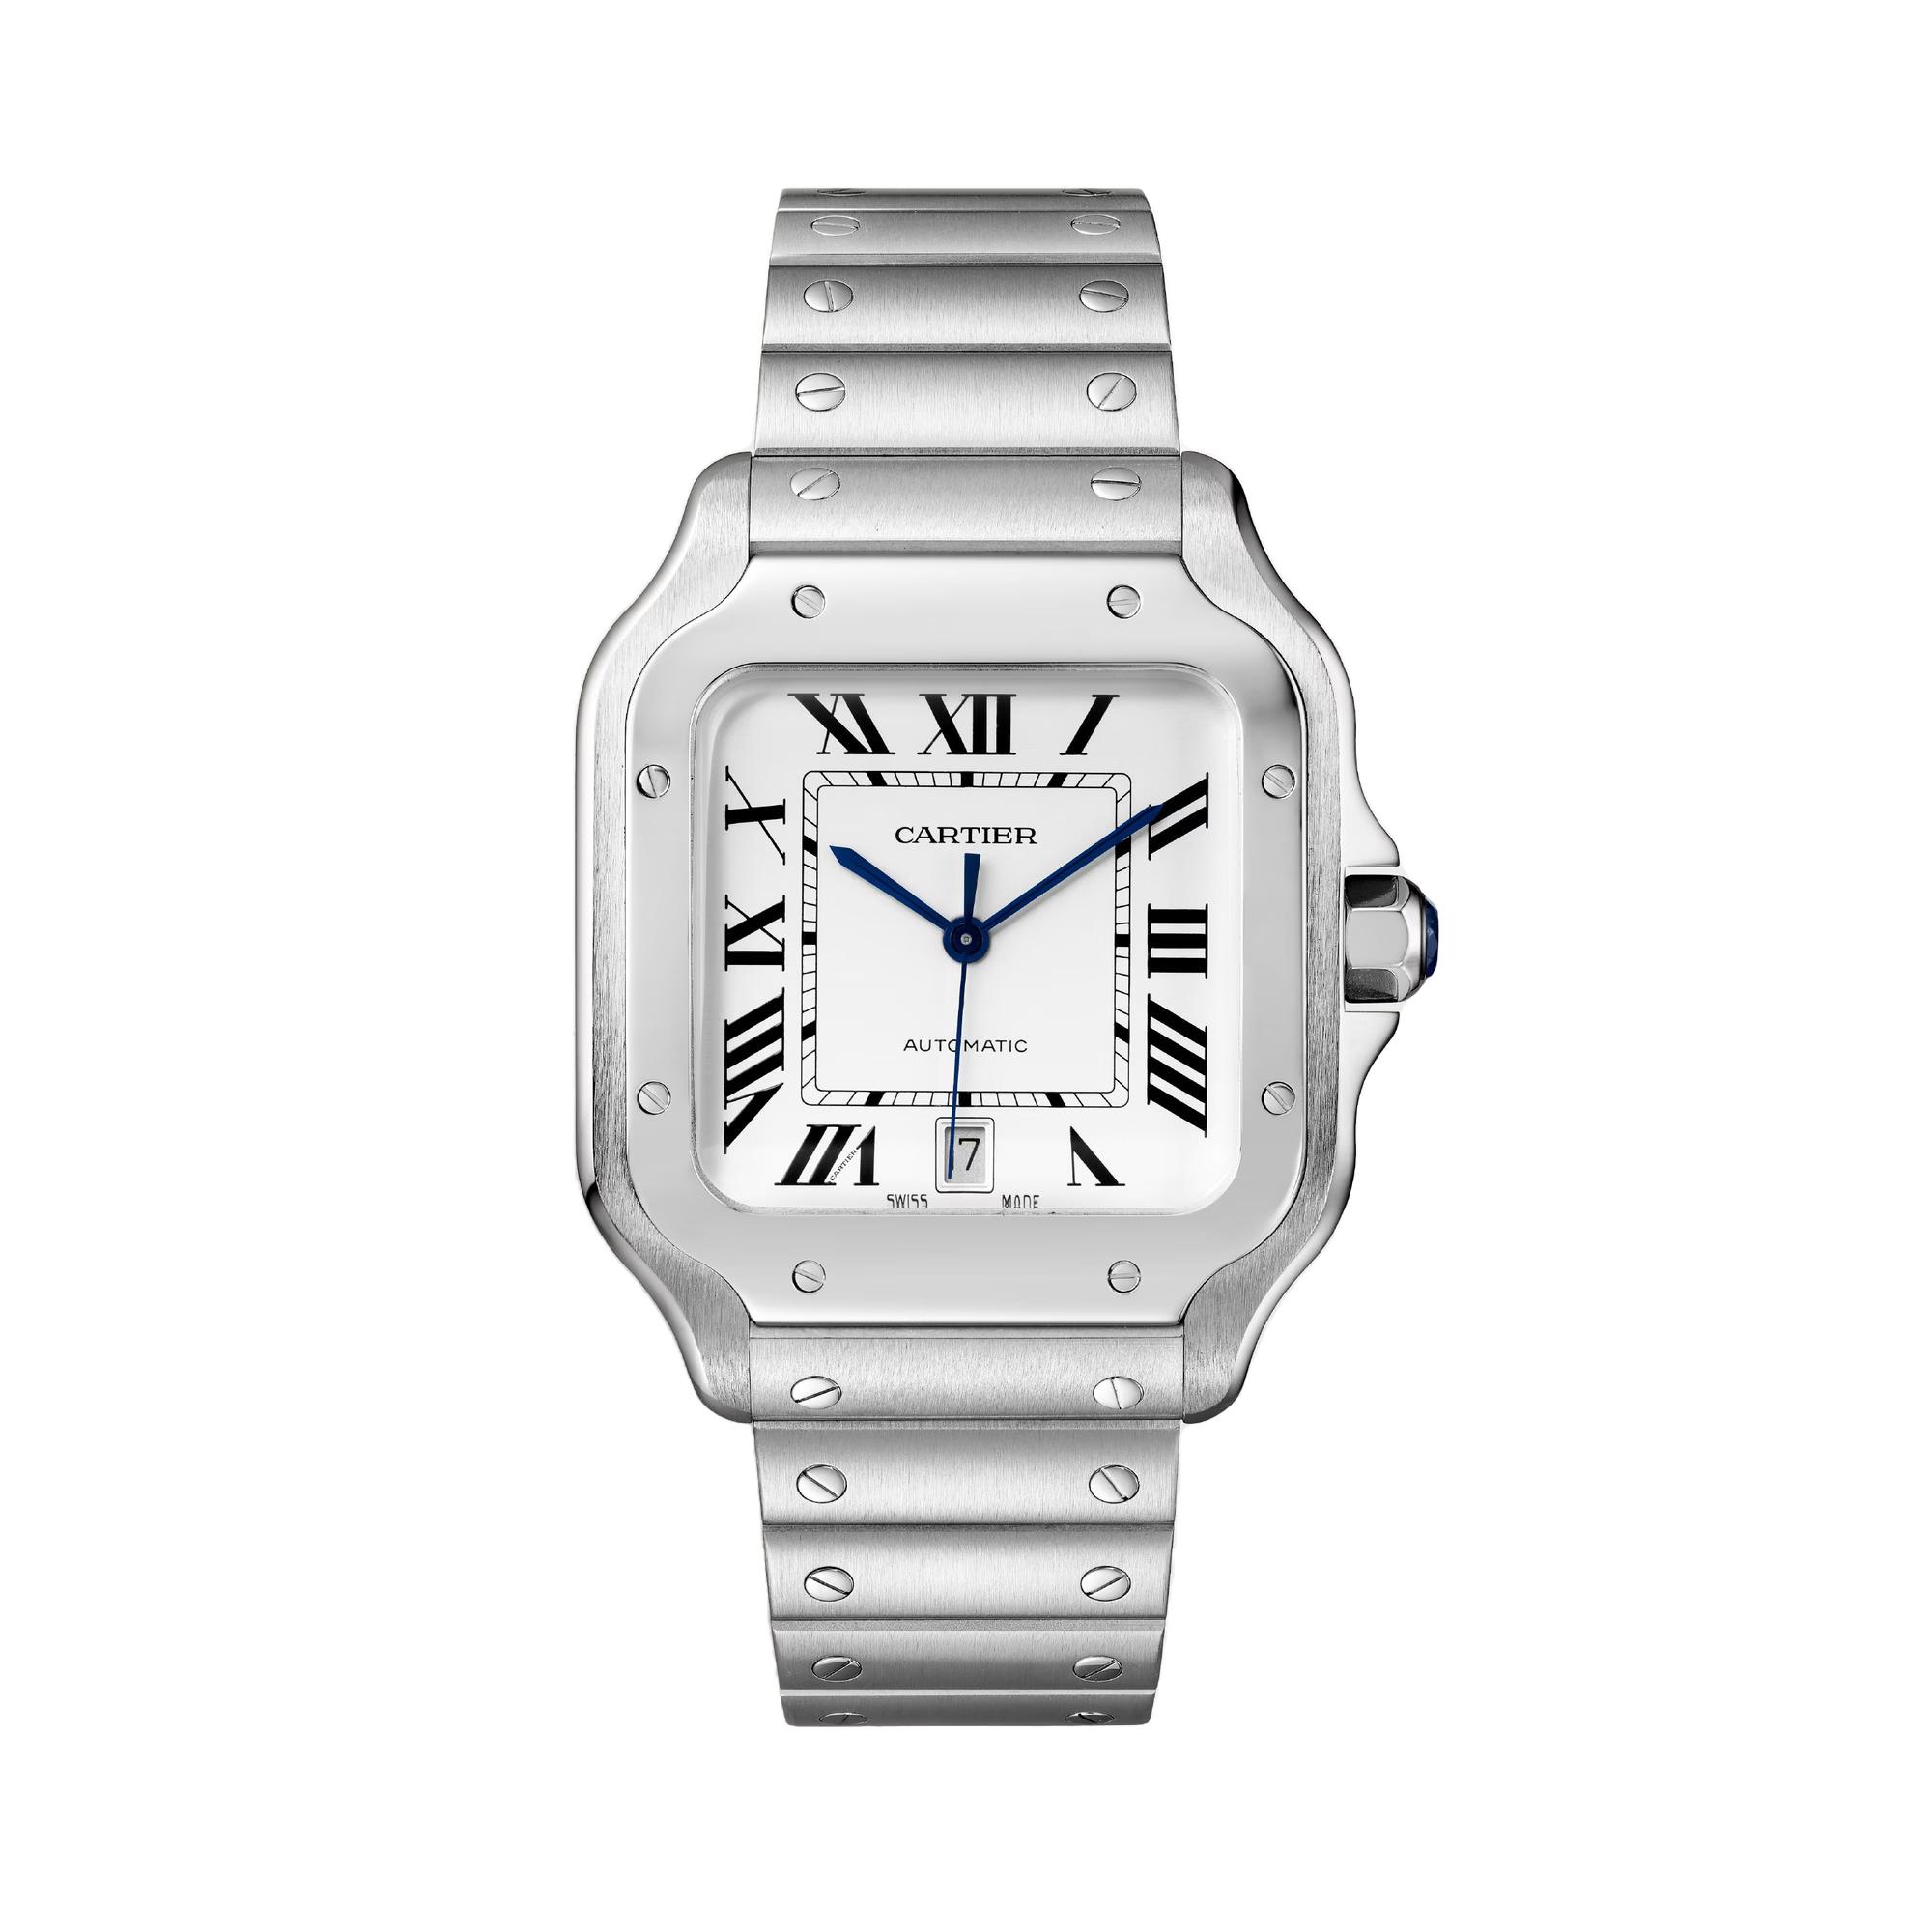 Santos de Cartier Watch, large model